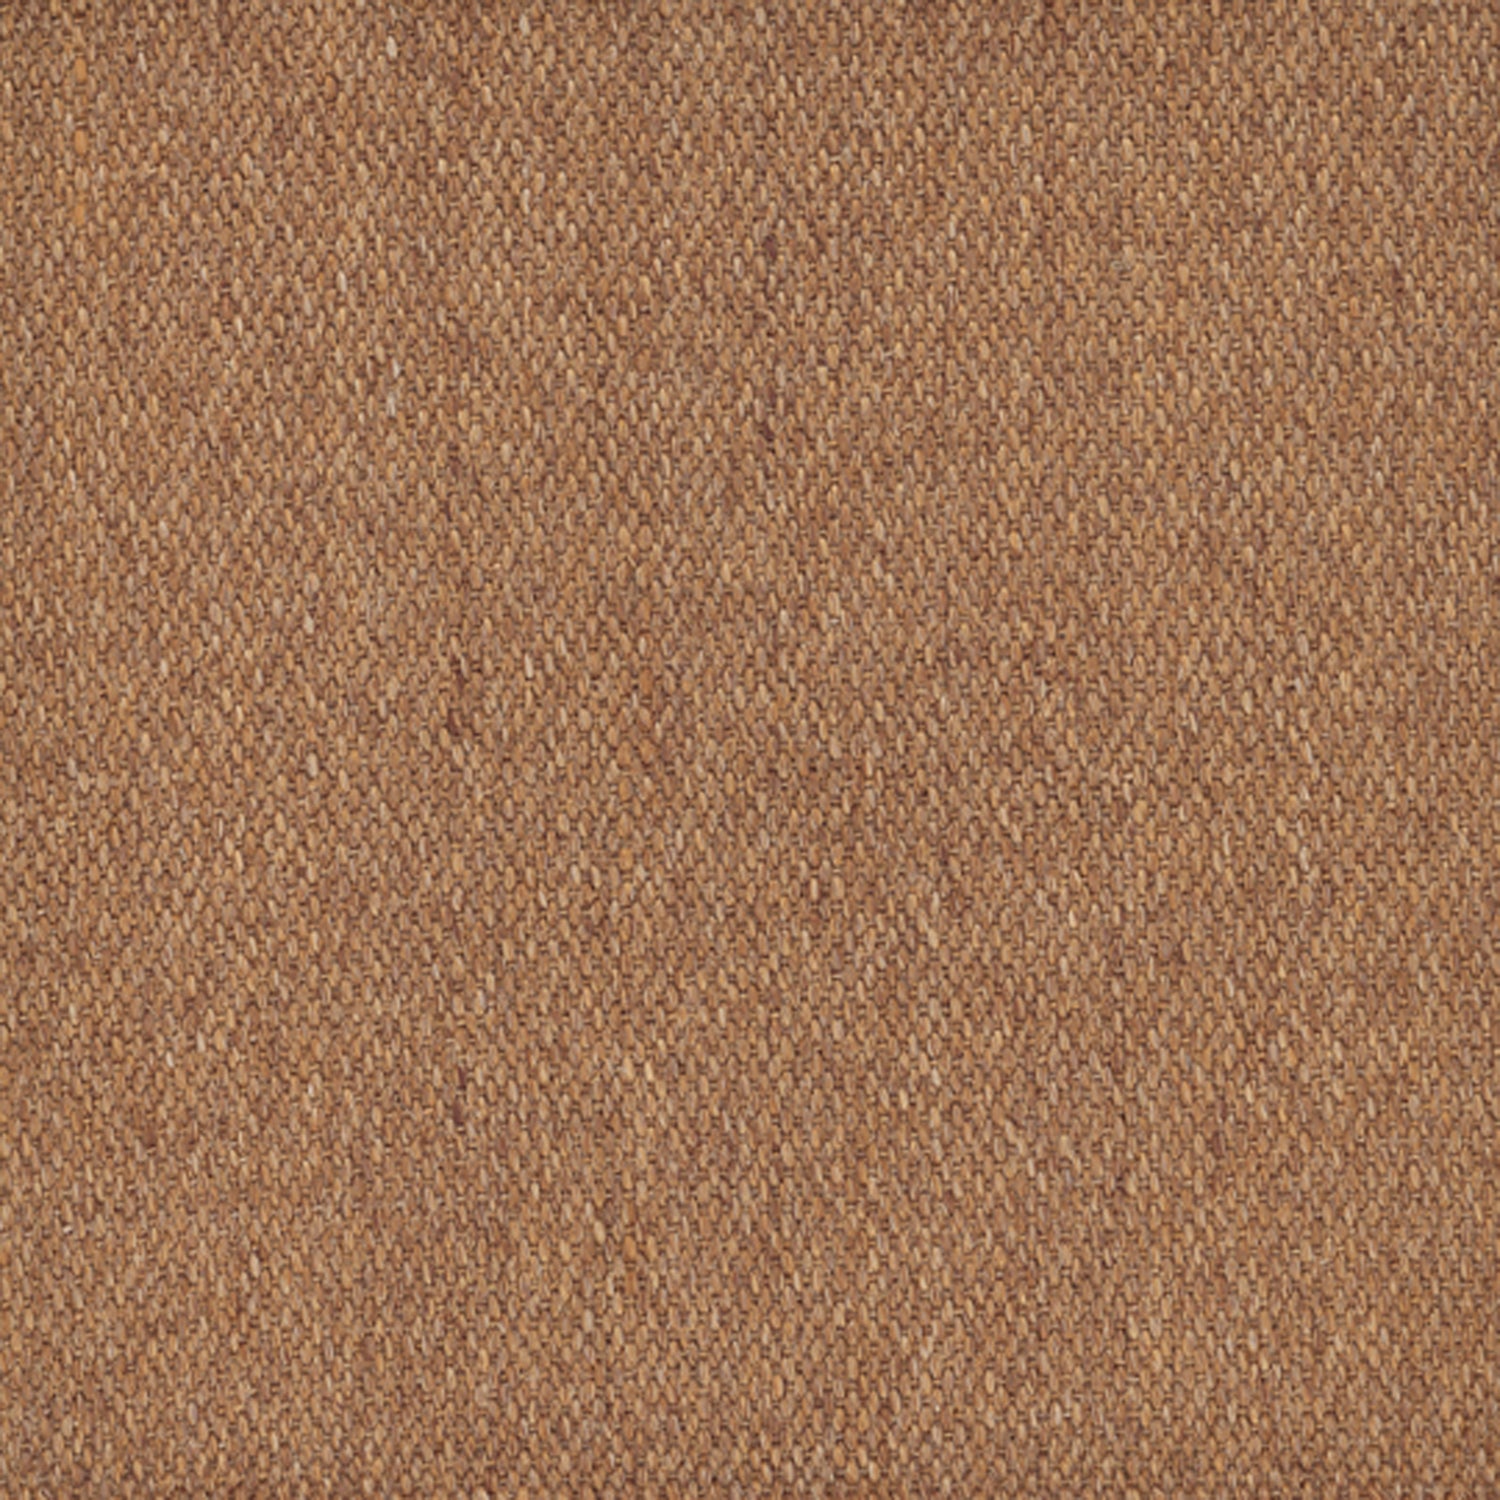 Sisal broadloom carpet swatch in a flat weave in brown.